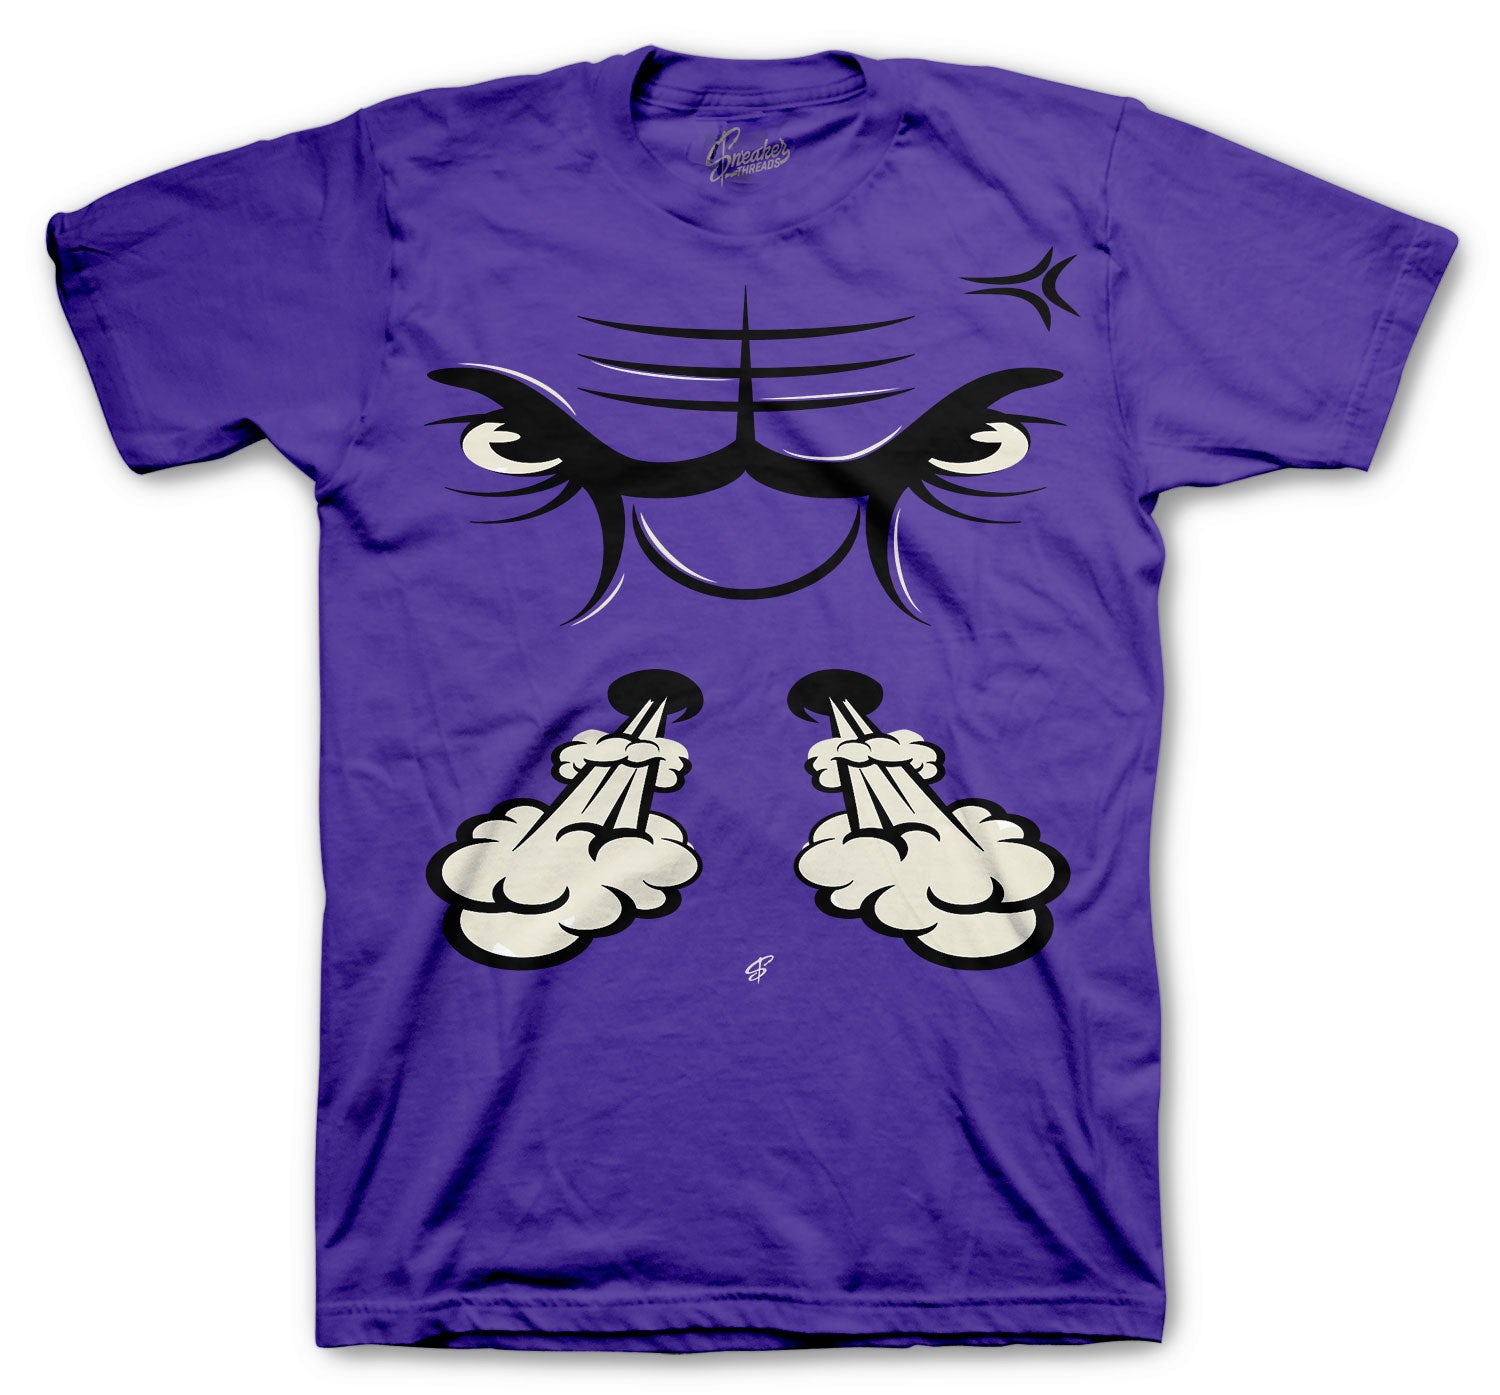 Purple Metallic Jordan 4 sneakers matching with t shirt collection for men